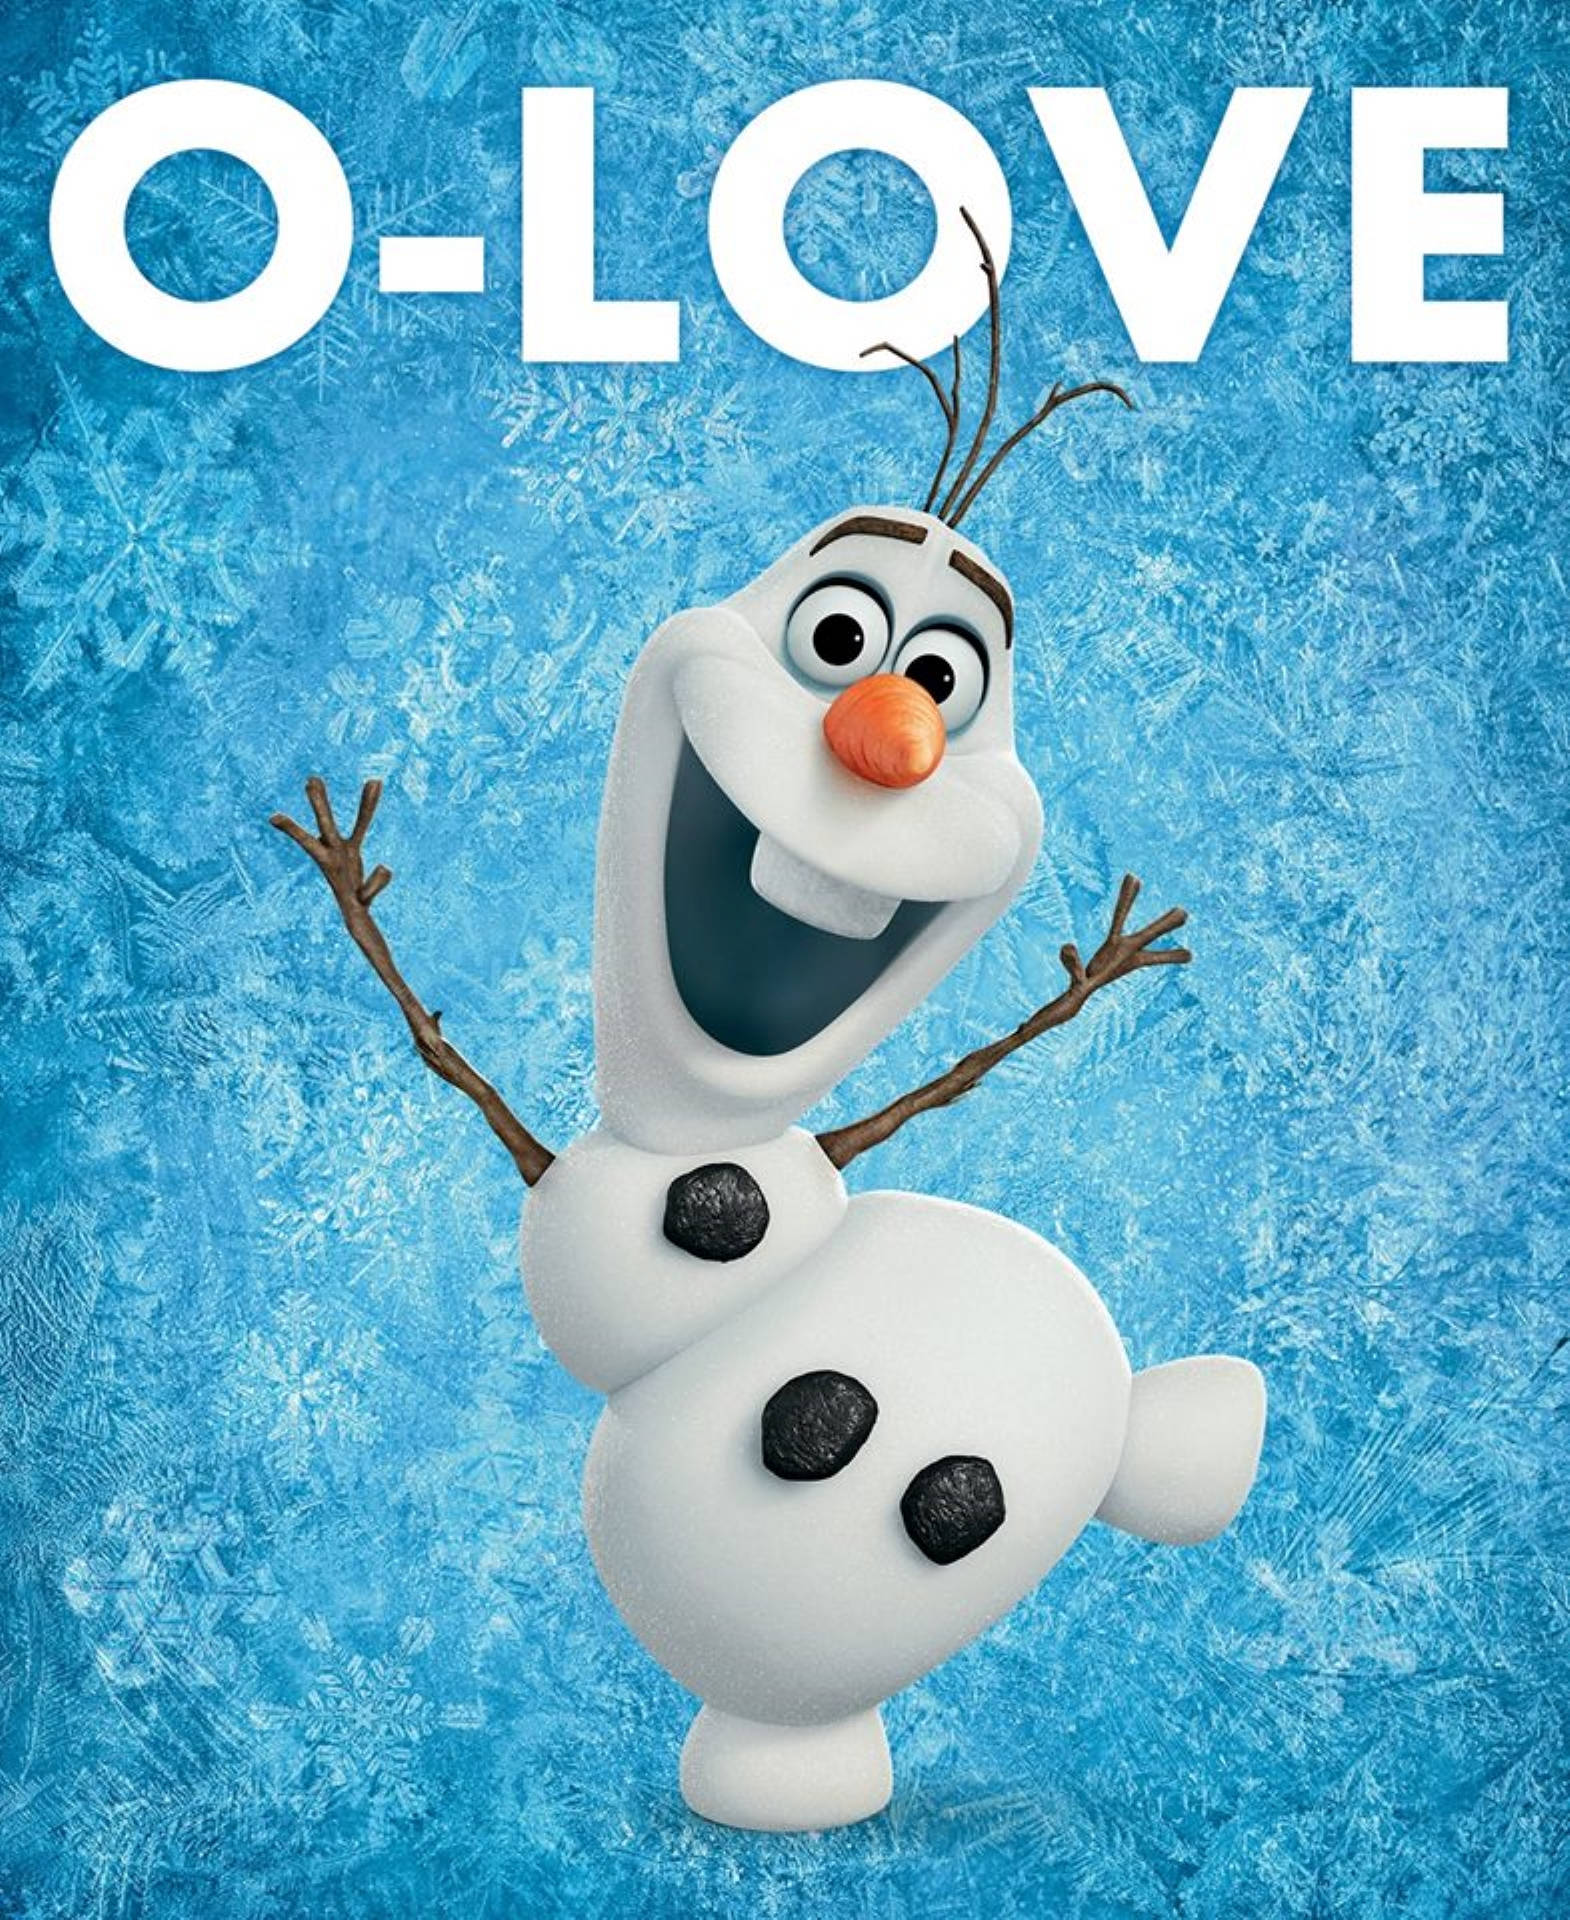 Olaf Love Art Wallpaper